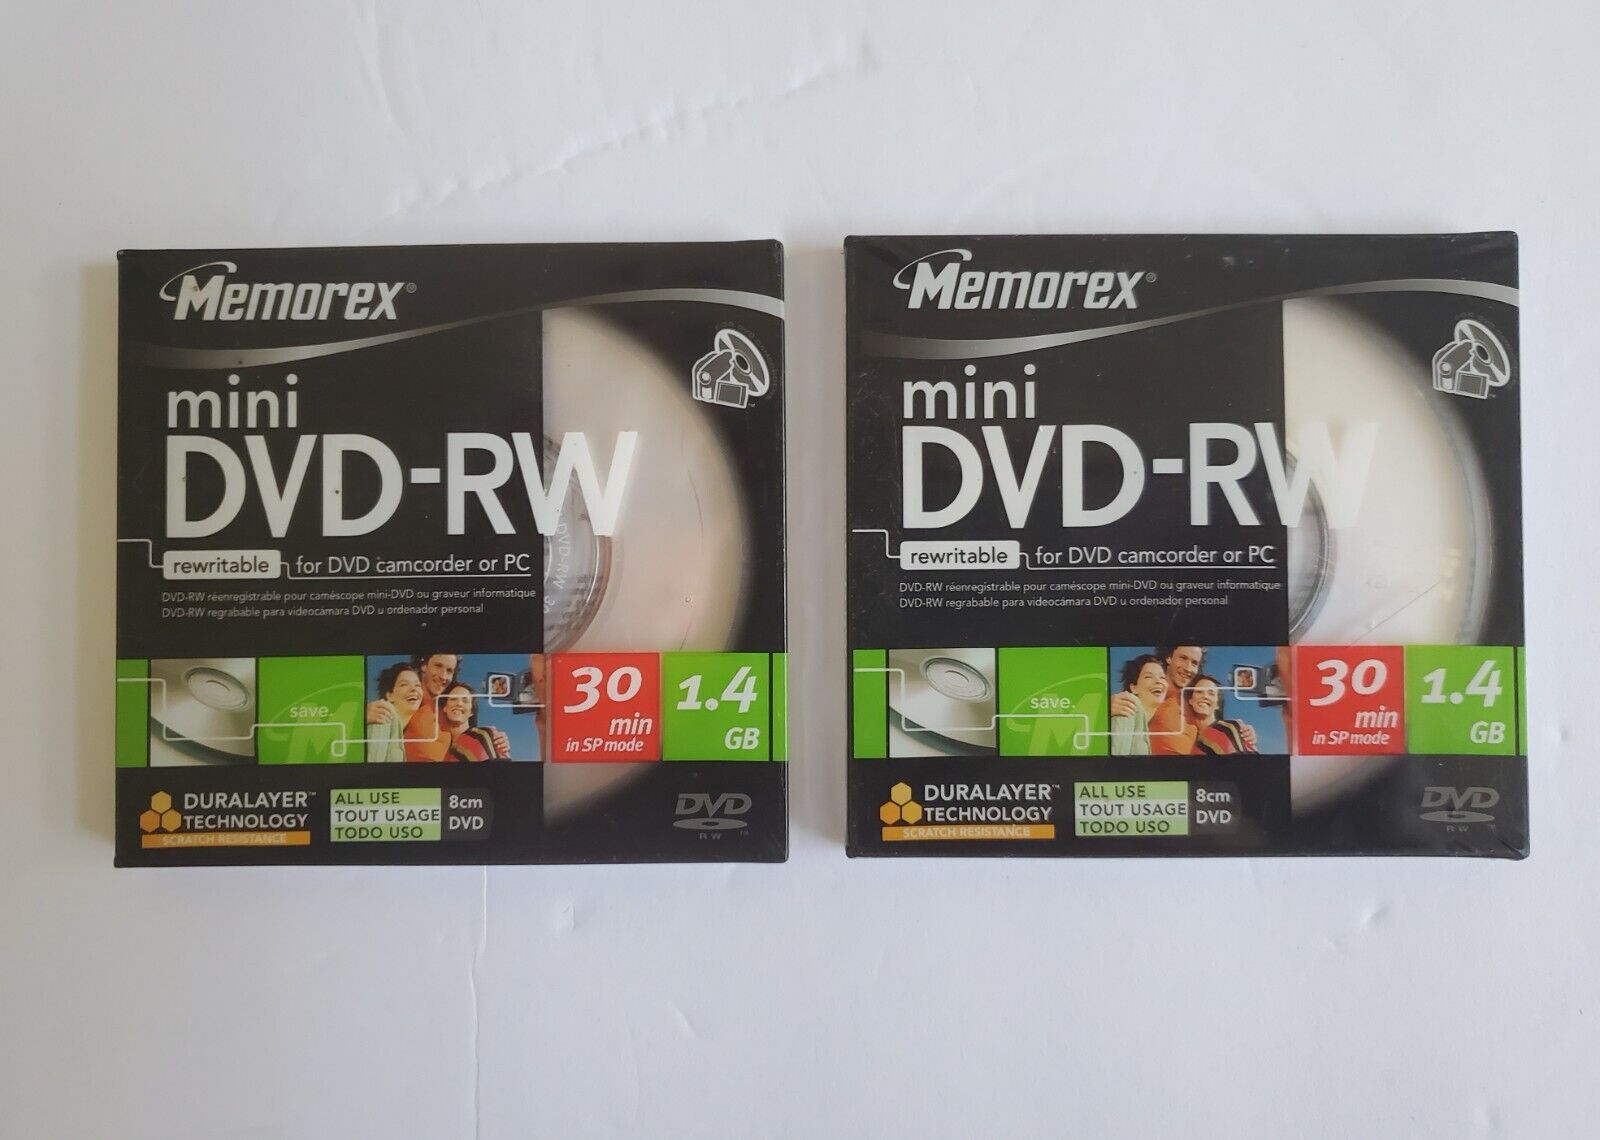 Memorex New Sealed Lot of 2Mini DVD-RW Rewritable DVD Camcorder/PC 30 Min. 1.4GB